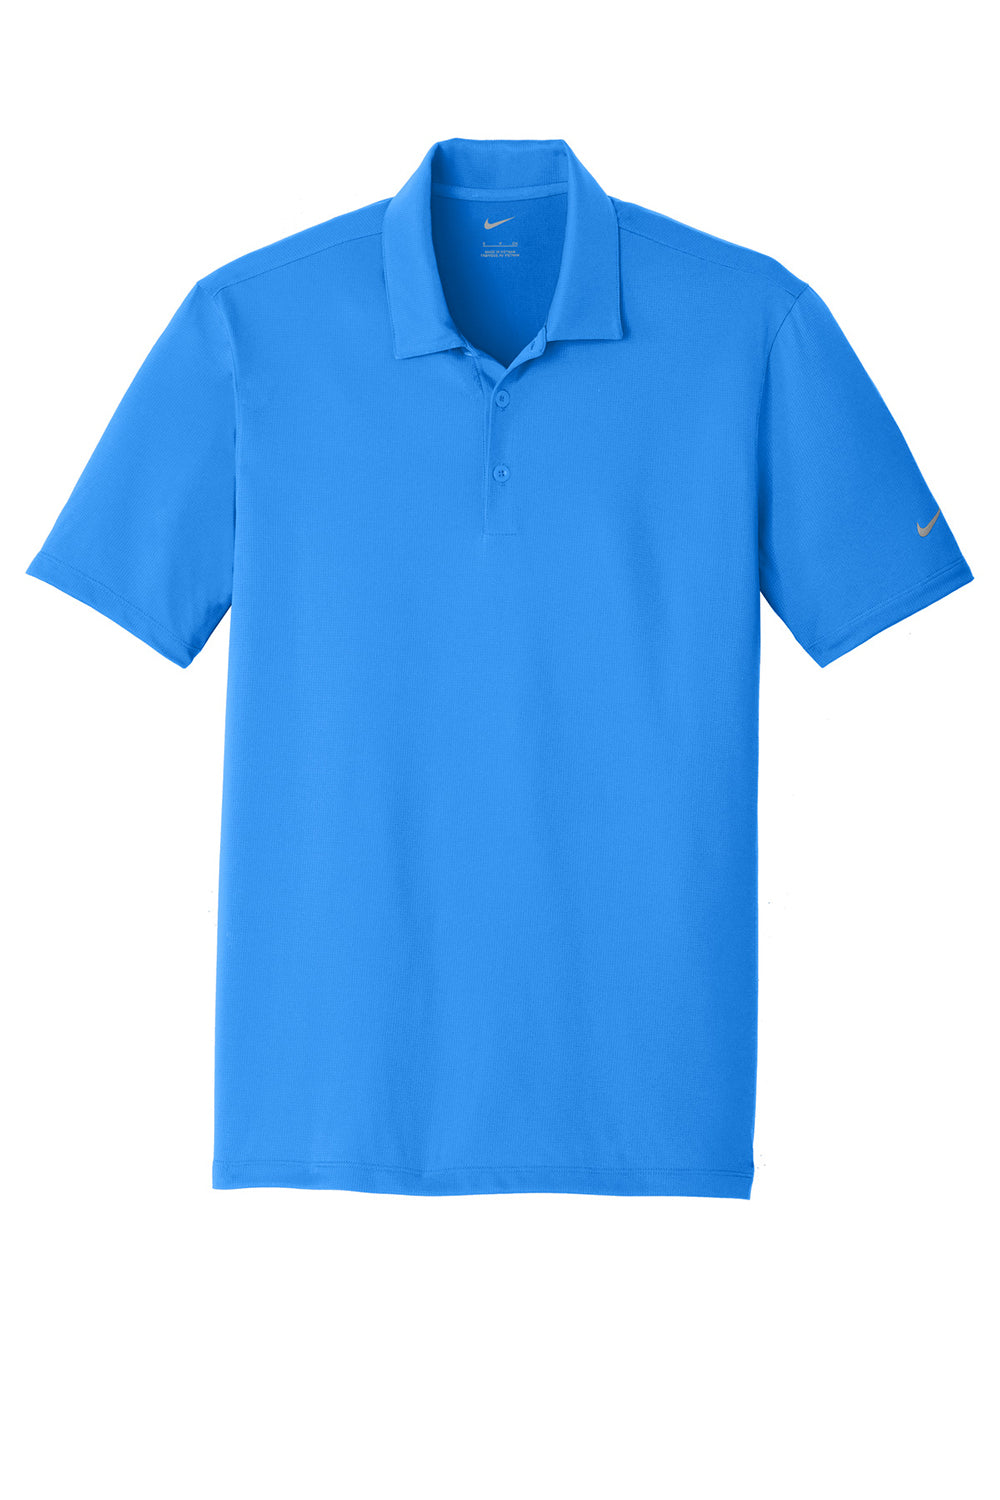 Nike 883681 Mens Legacy Dri-Fit Moisture Wicking Short Sleeve Polo Shirt Photo Blue Flat Front